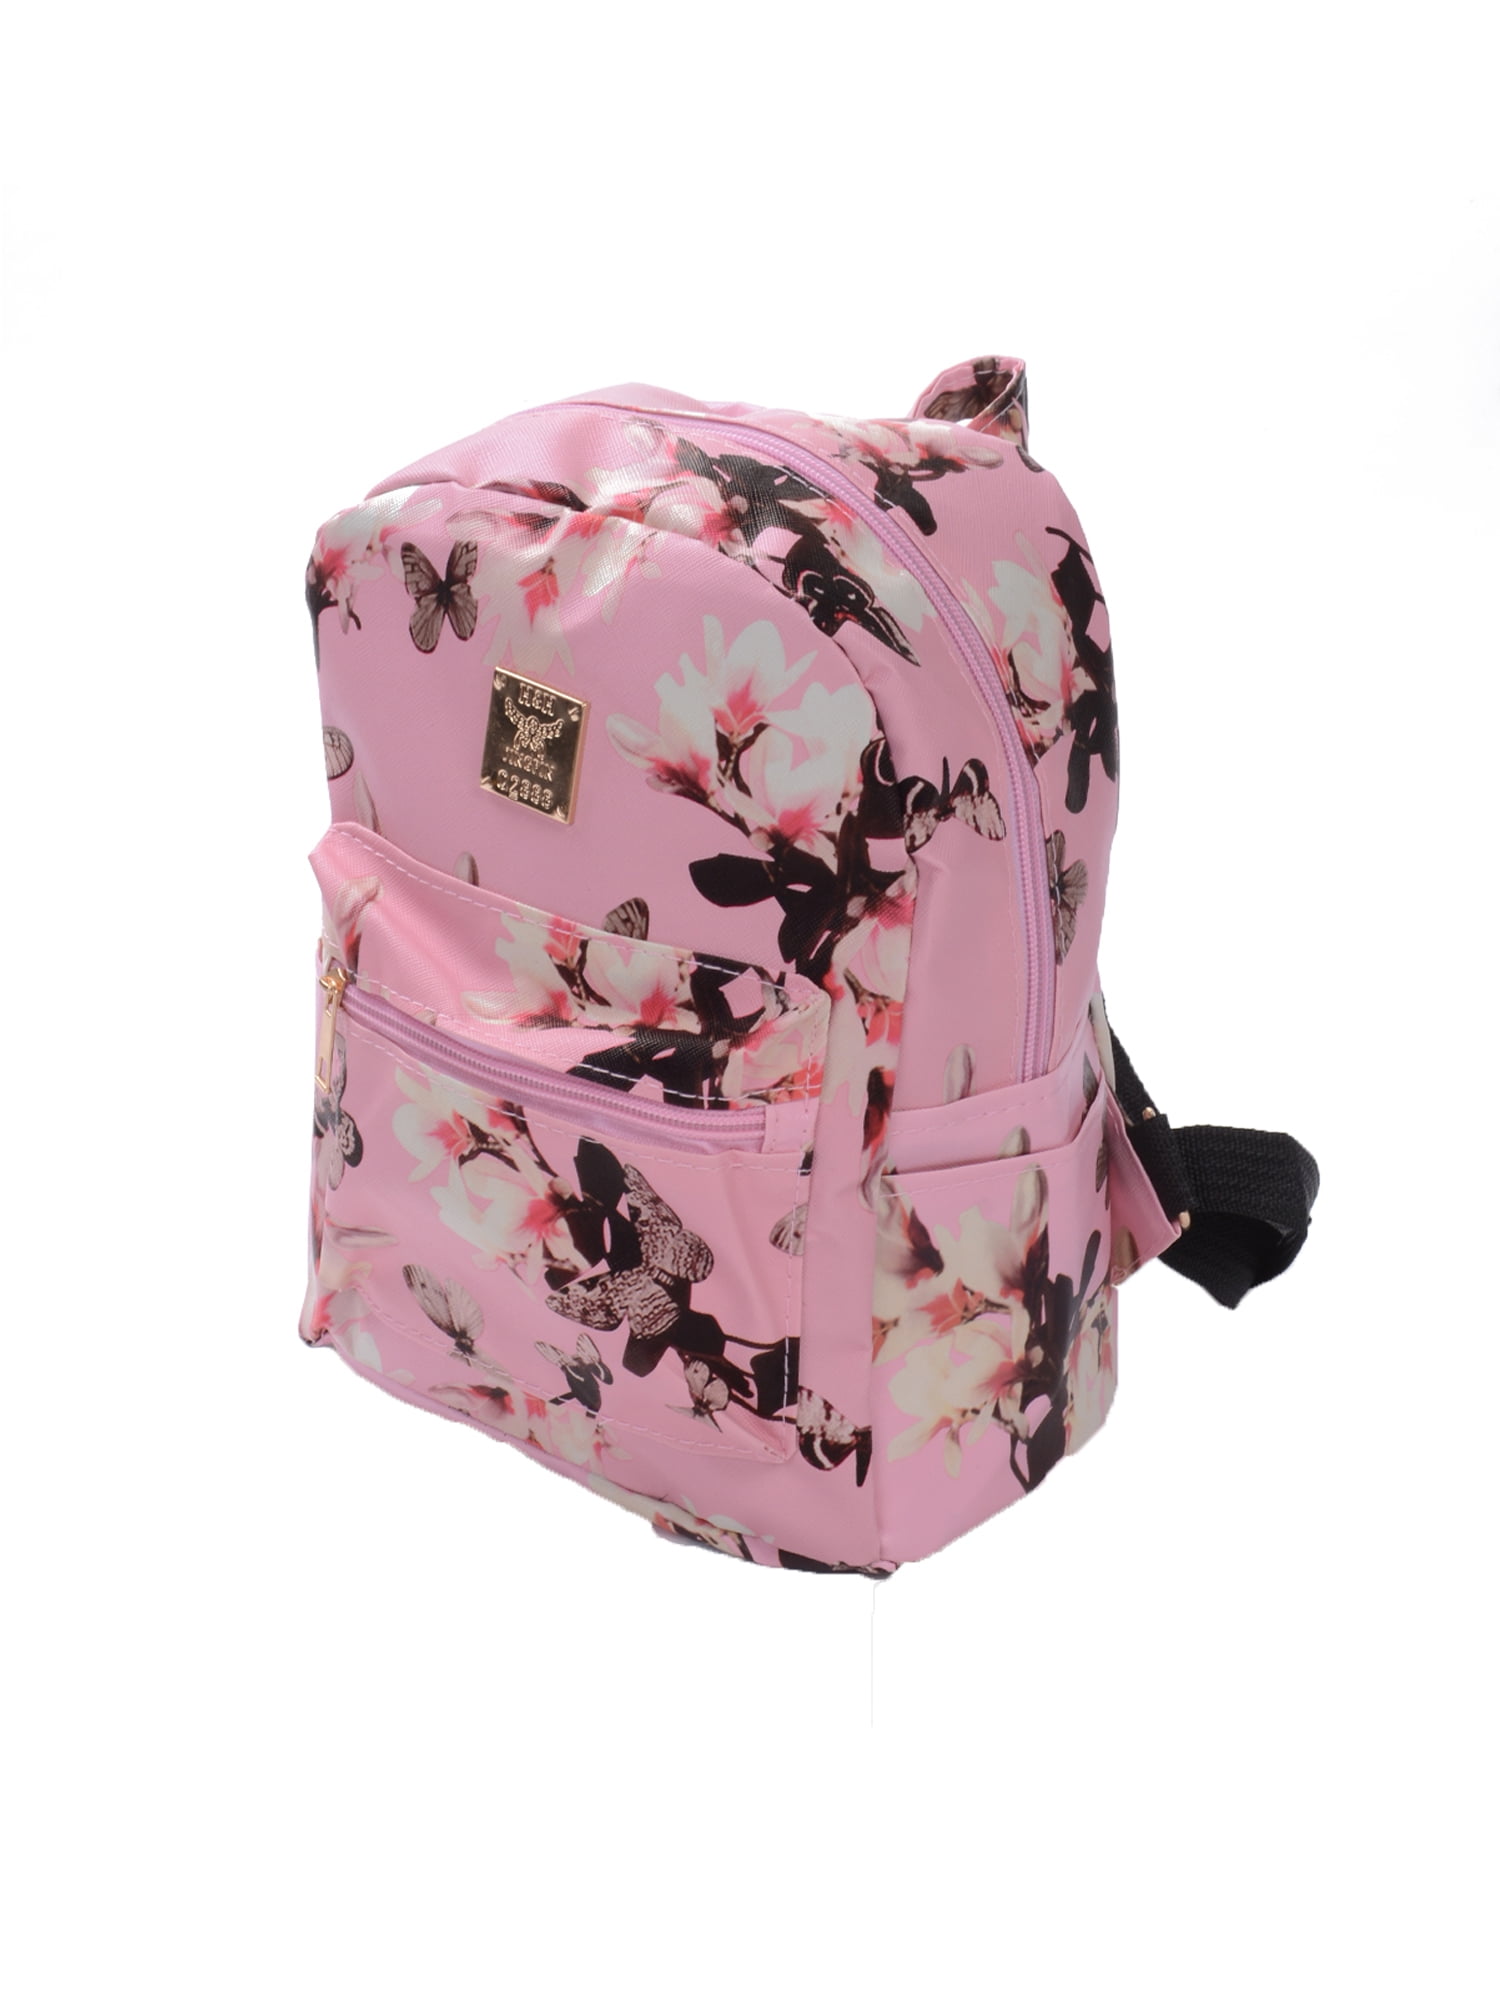 Details about   Mini Backpack Women Leather Shoulder Bag For Teenage Girls Kids Multi fashion 